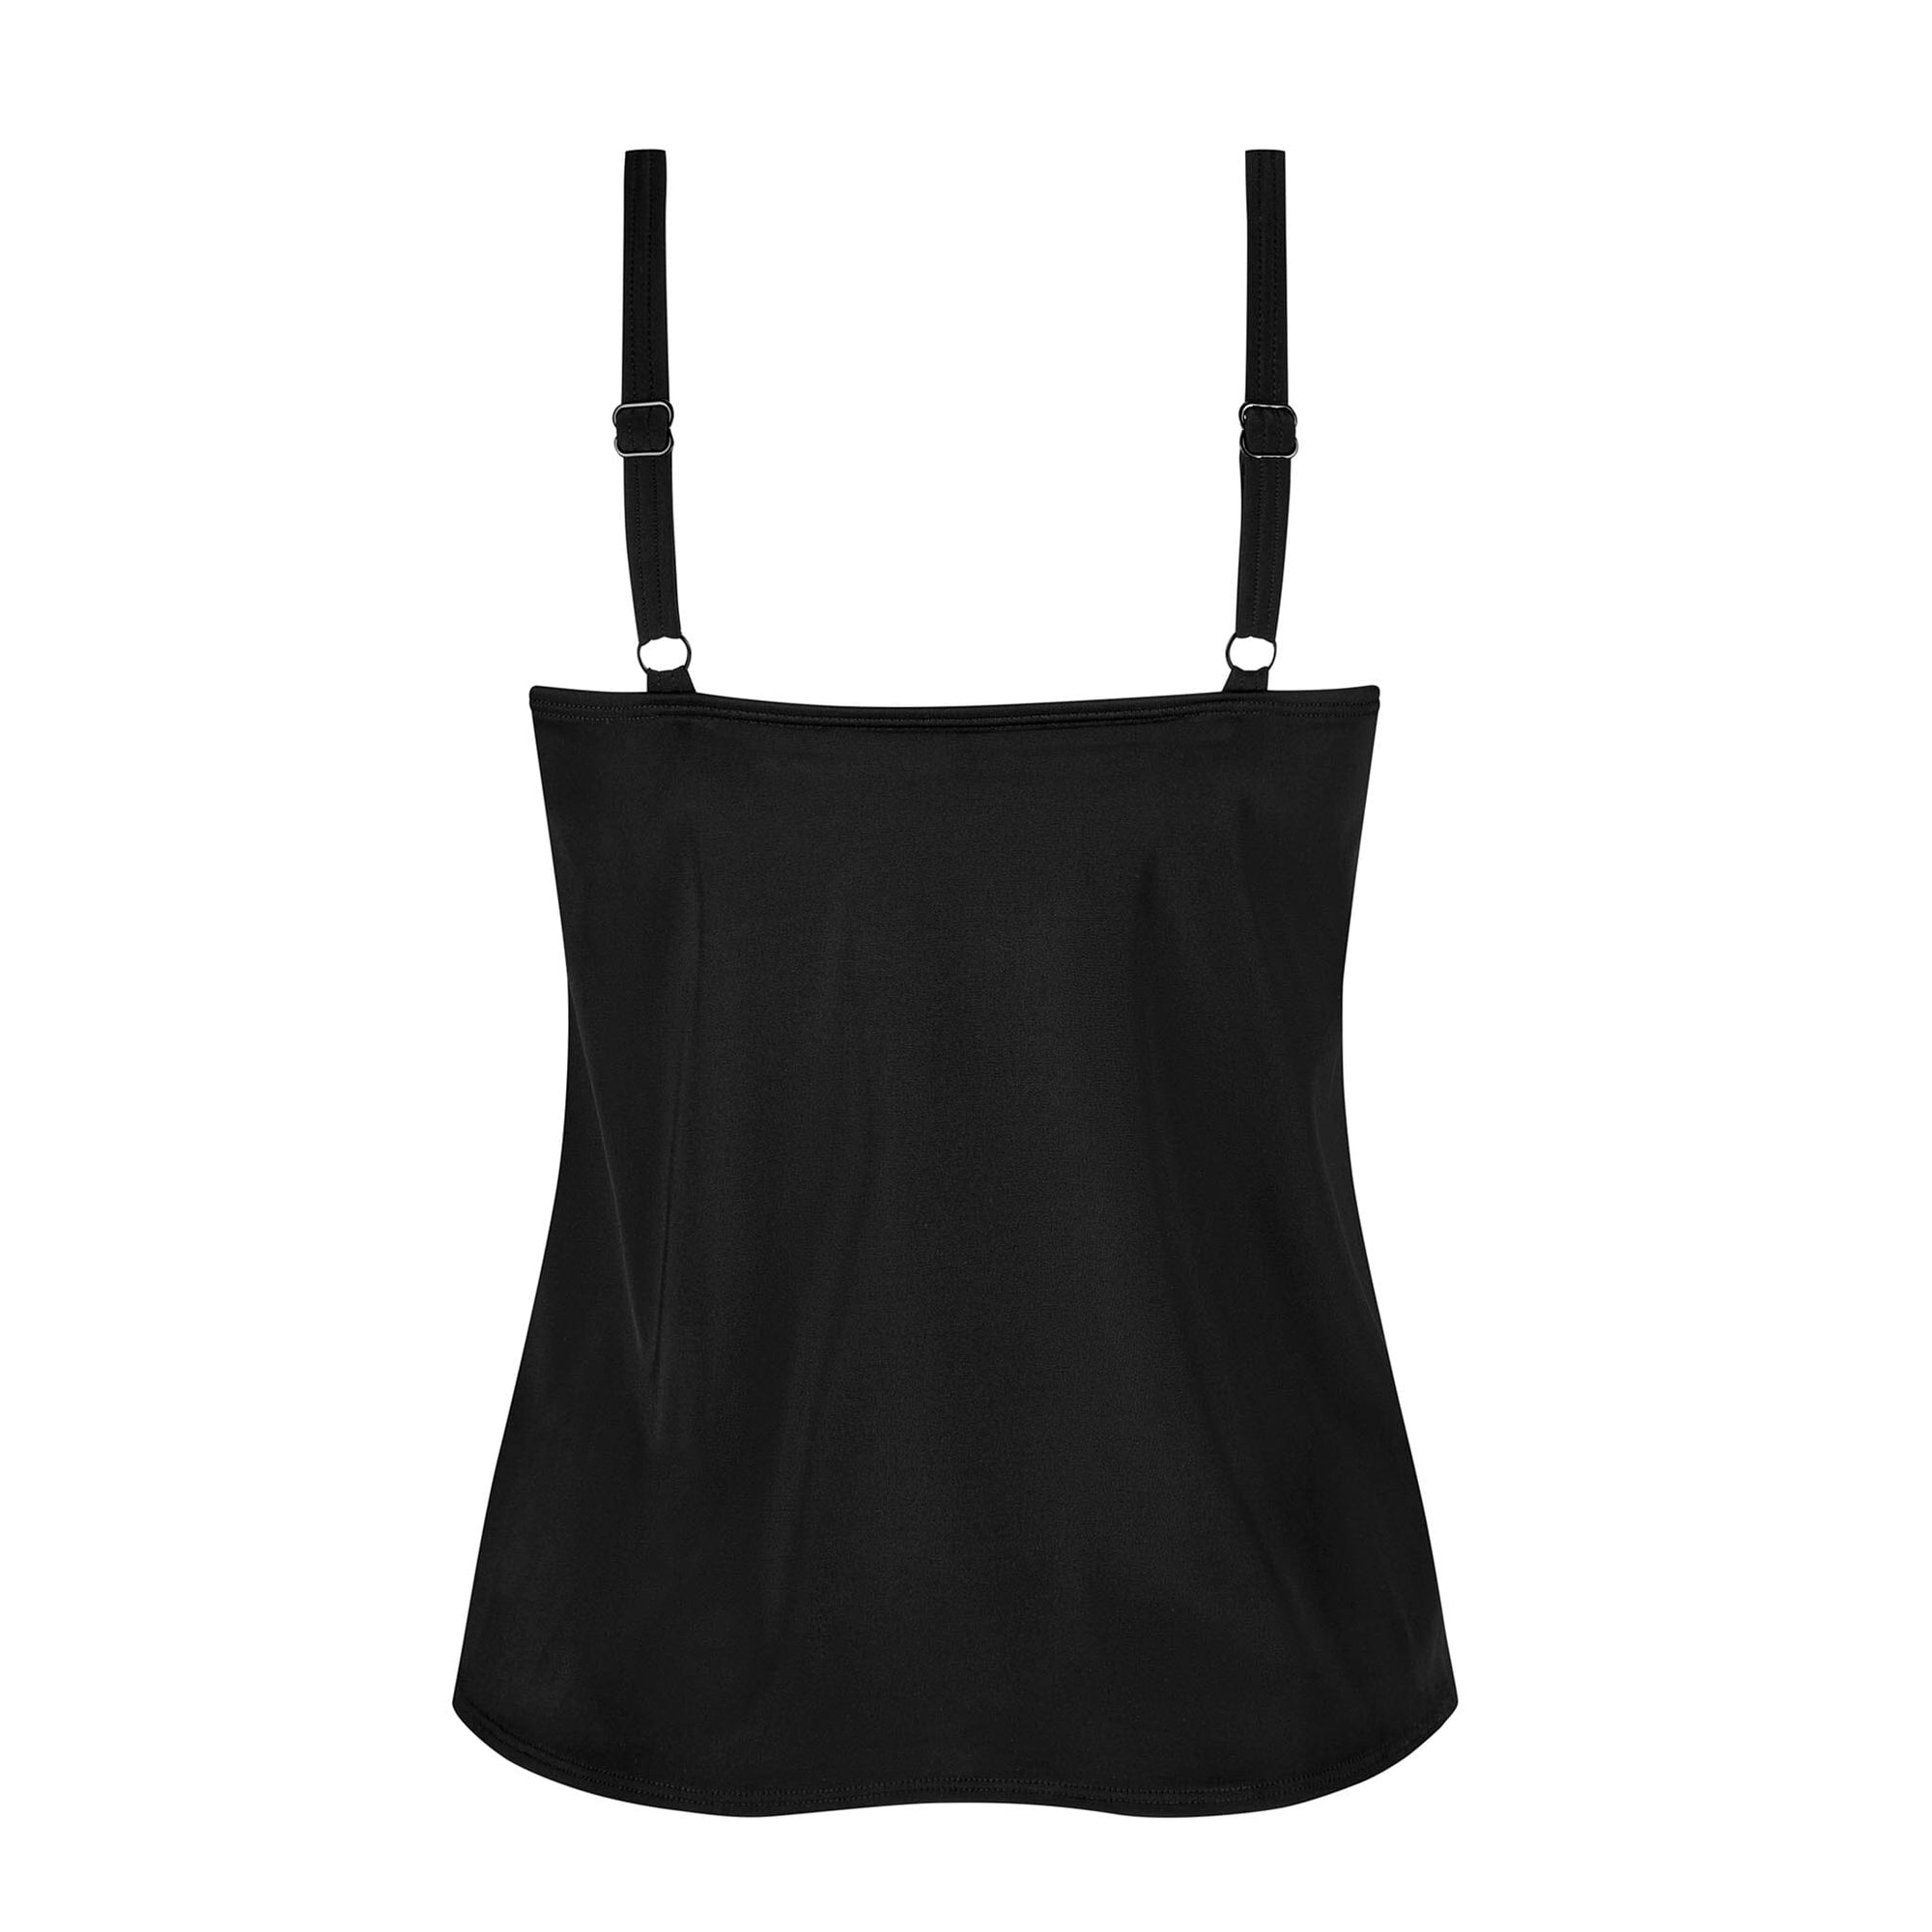 Shown with Mykonos Swim Skirt (#9742) in Black/White/Beige - Back View